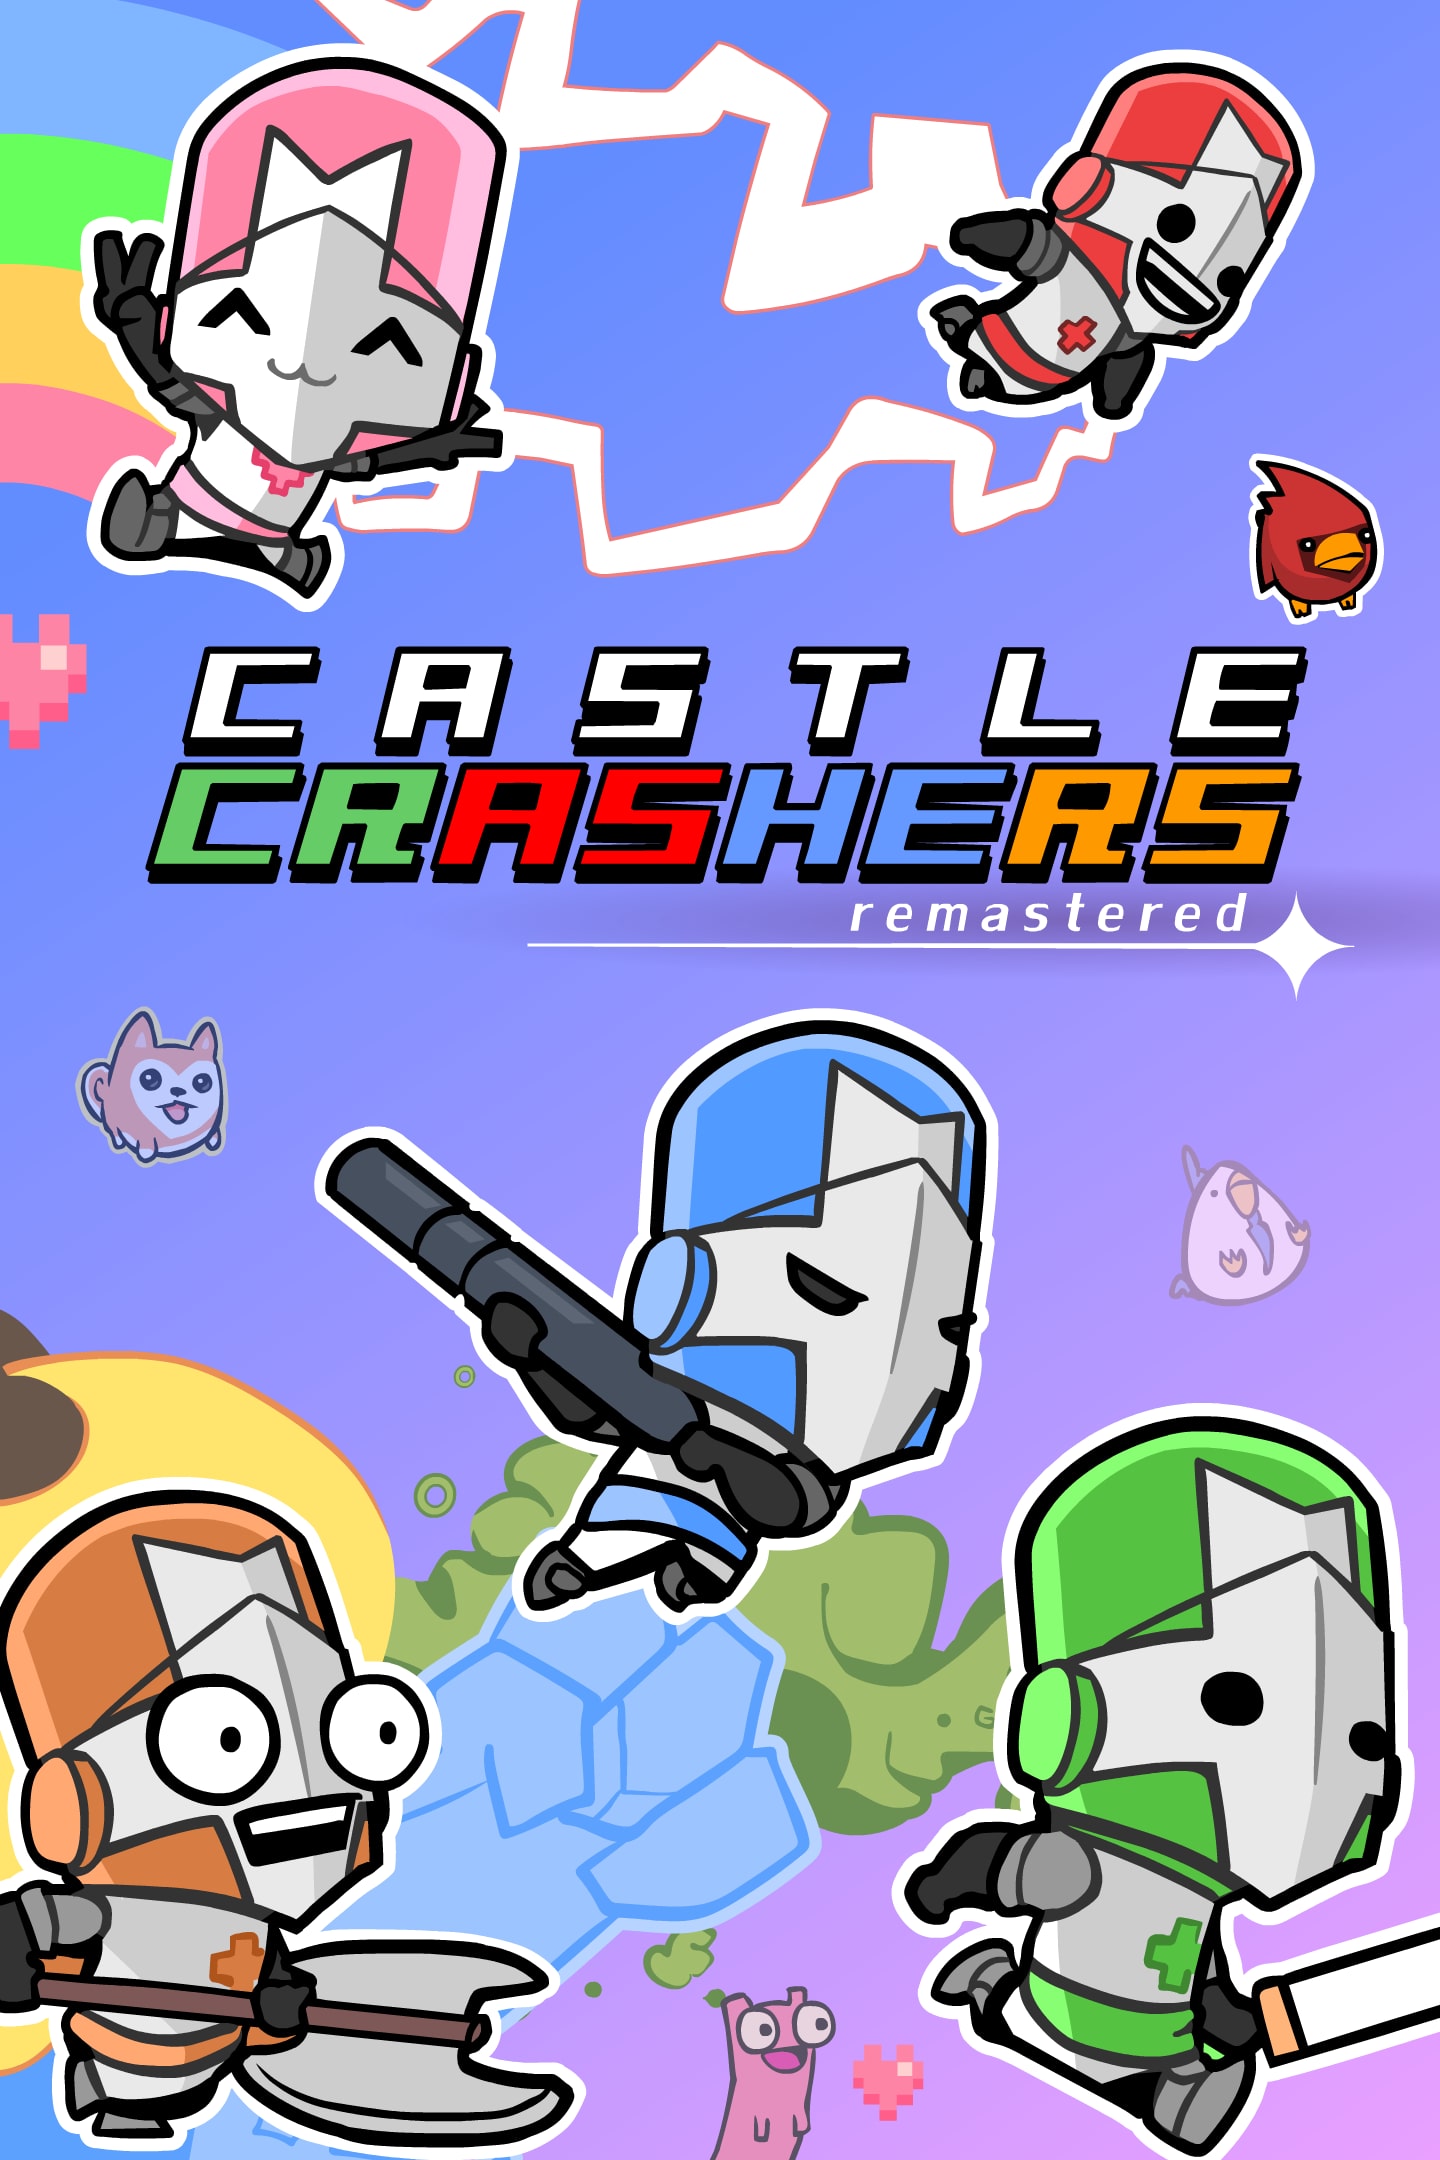 Castle Crashers PSN - Team Arena ! 